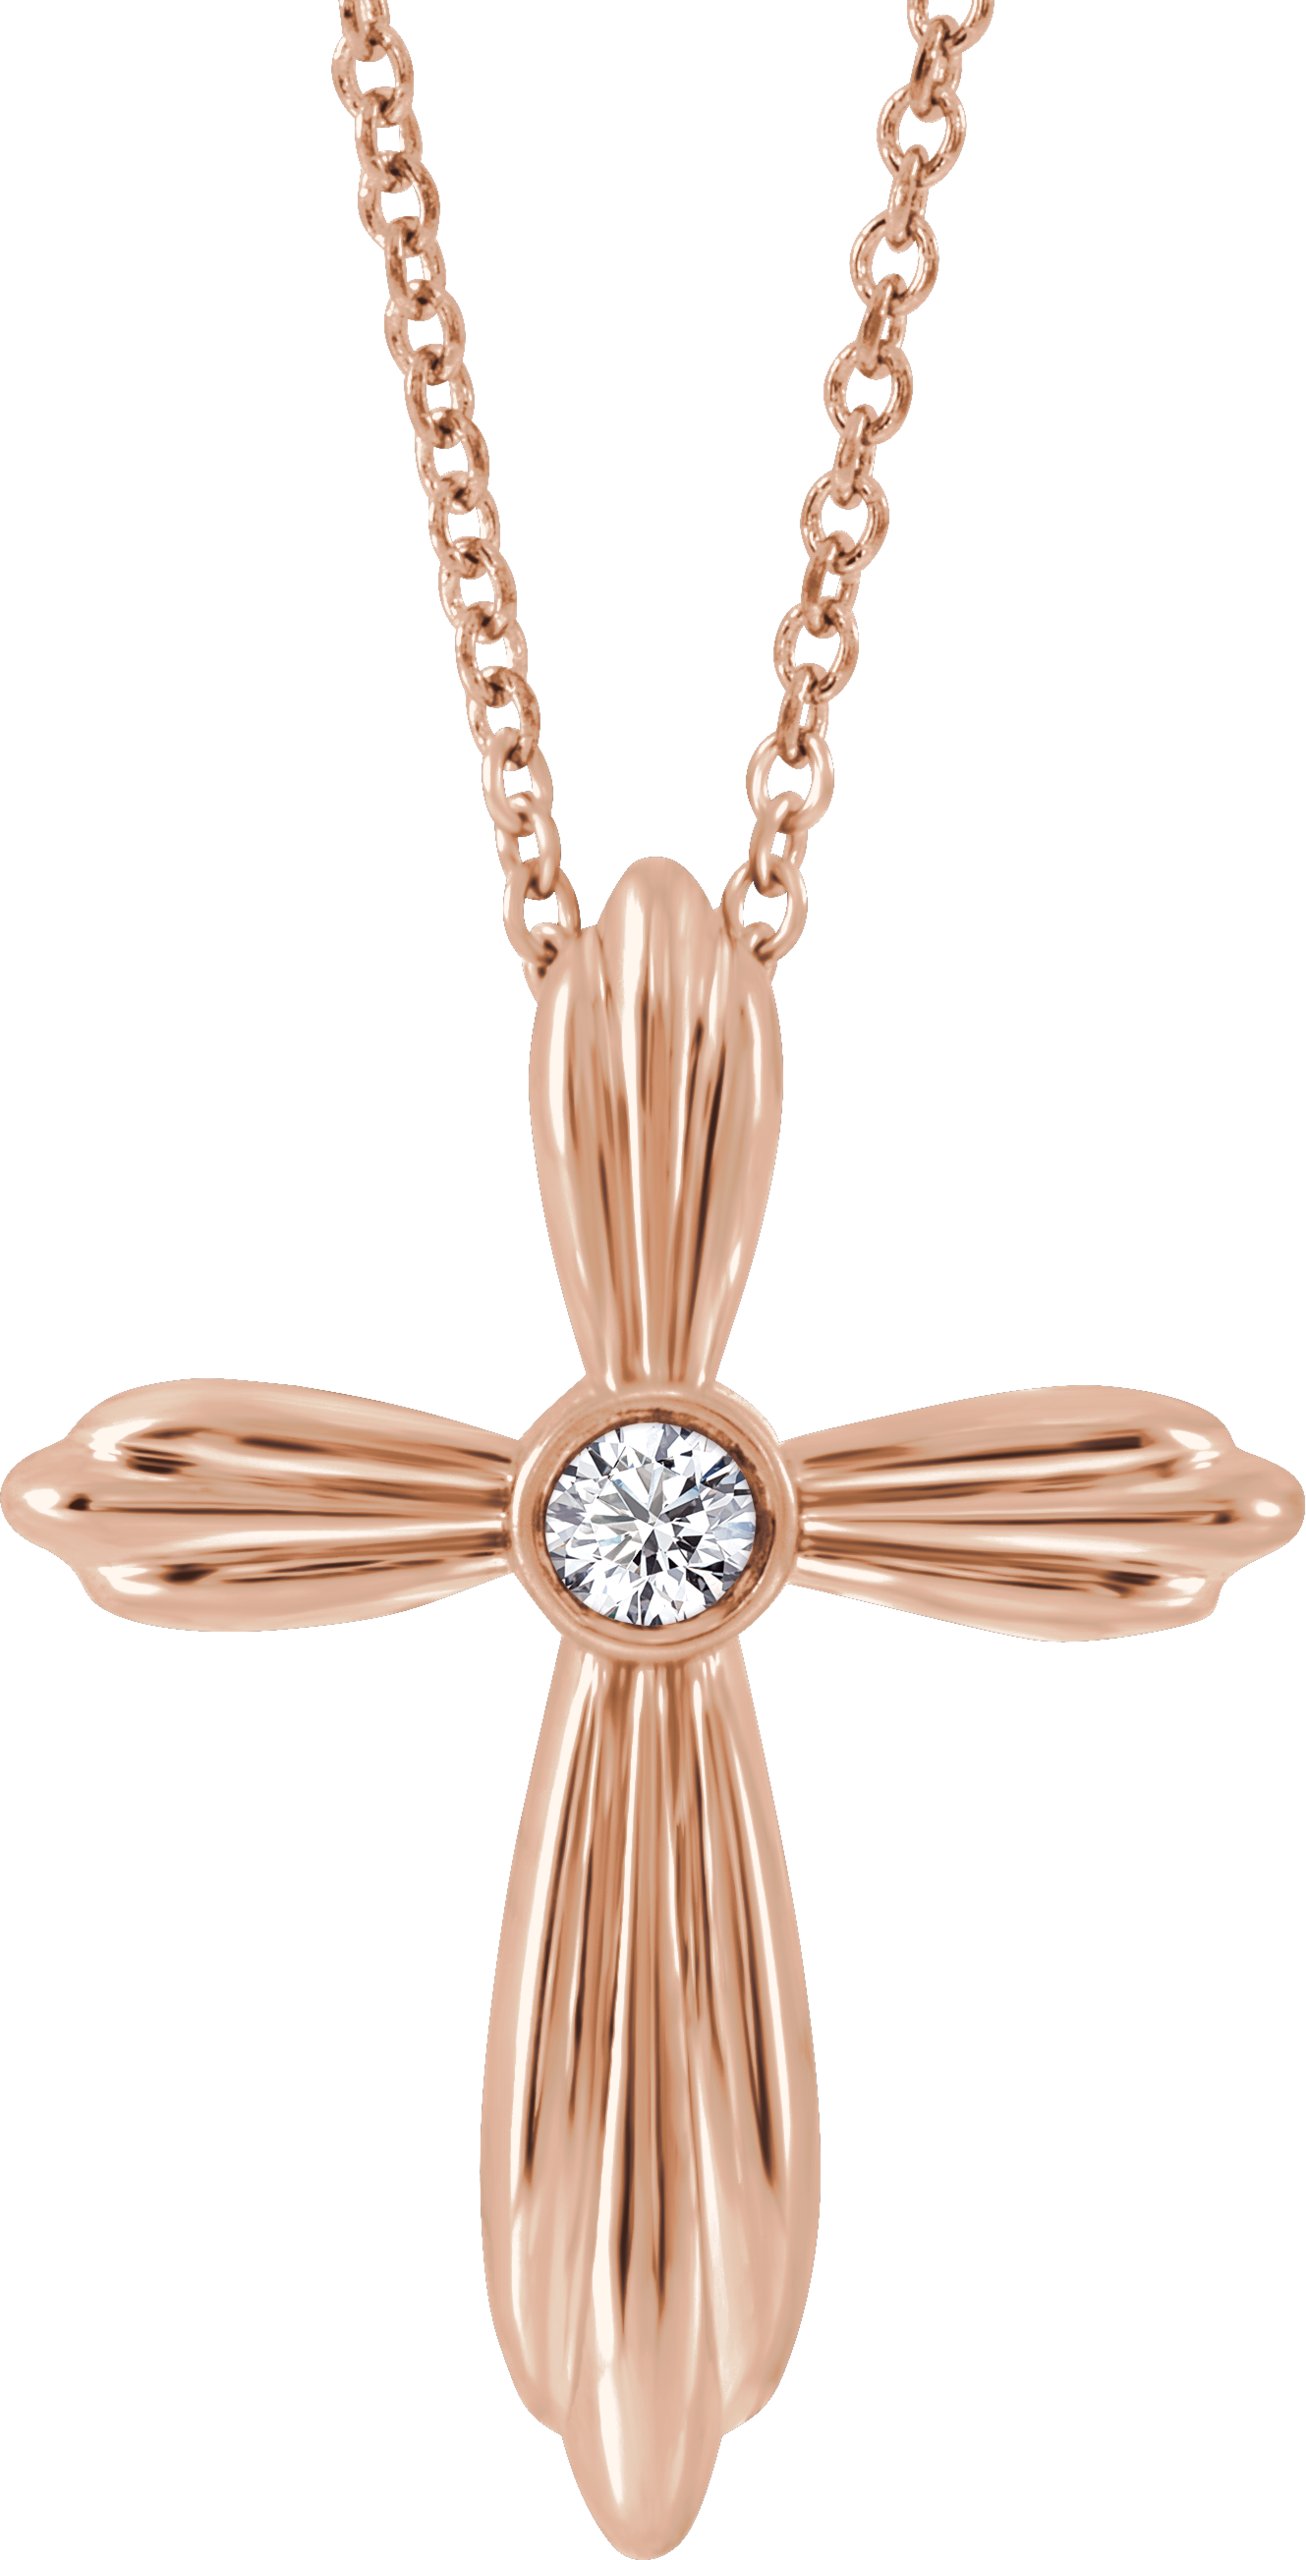 14K Rose Diamond Cross 16-18" Necklace